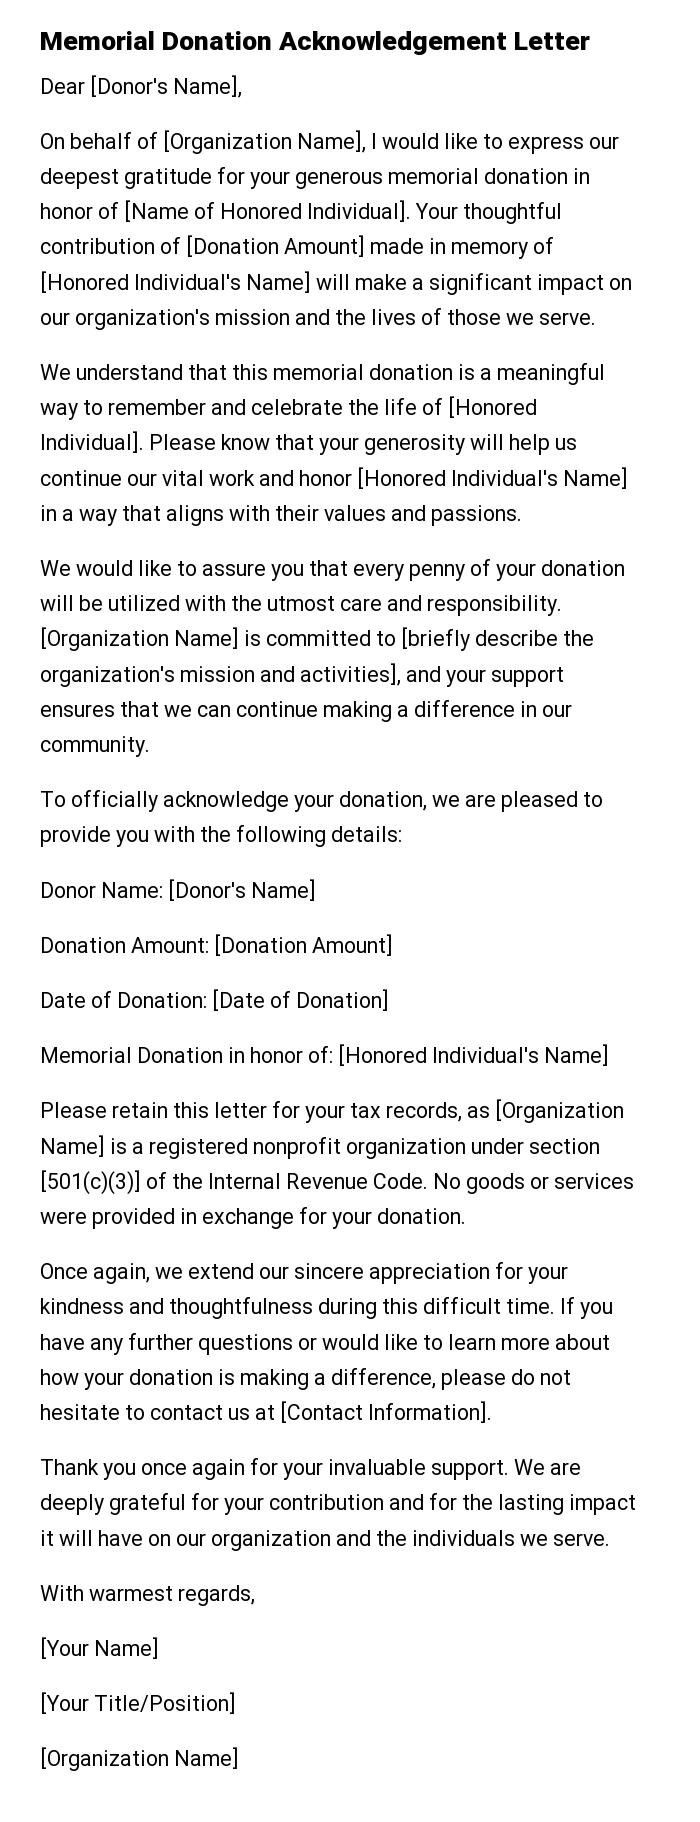 Memorial Donation Acknowledgement Letter